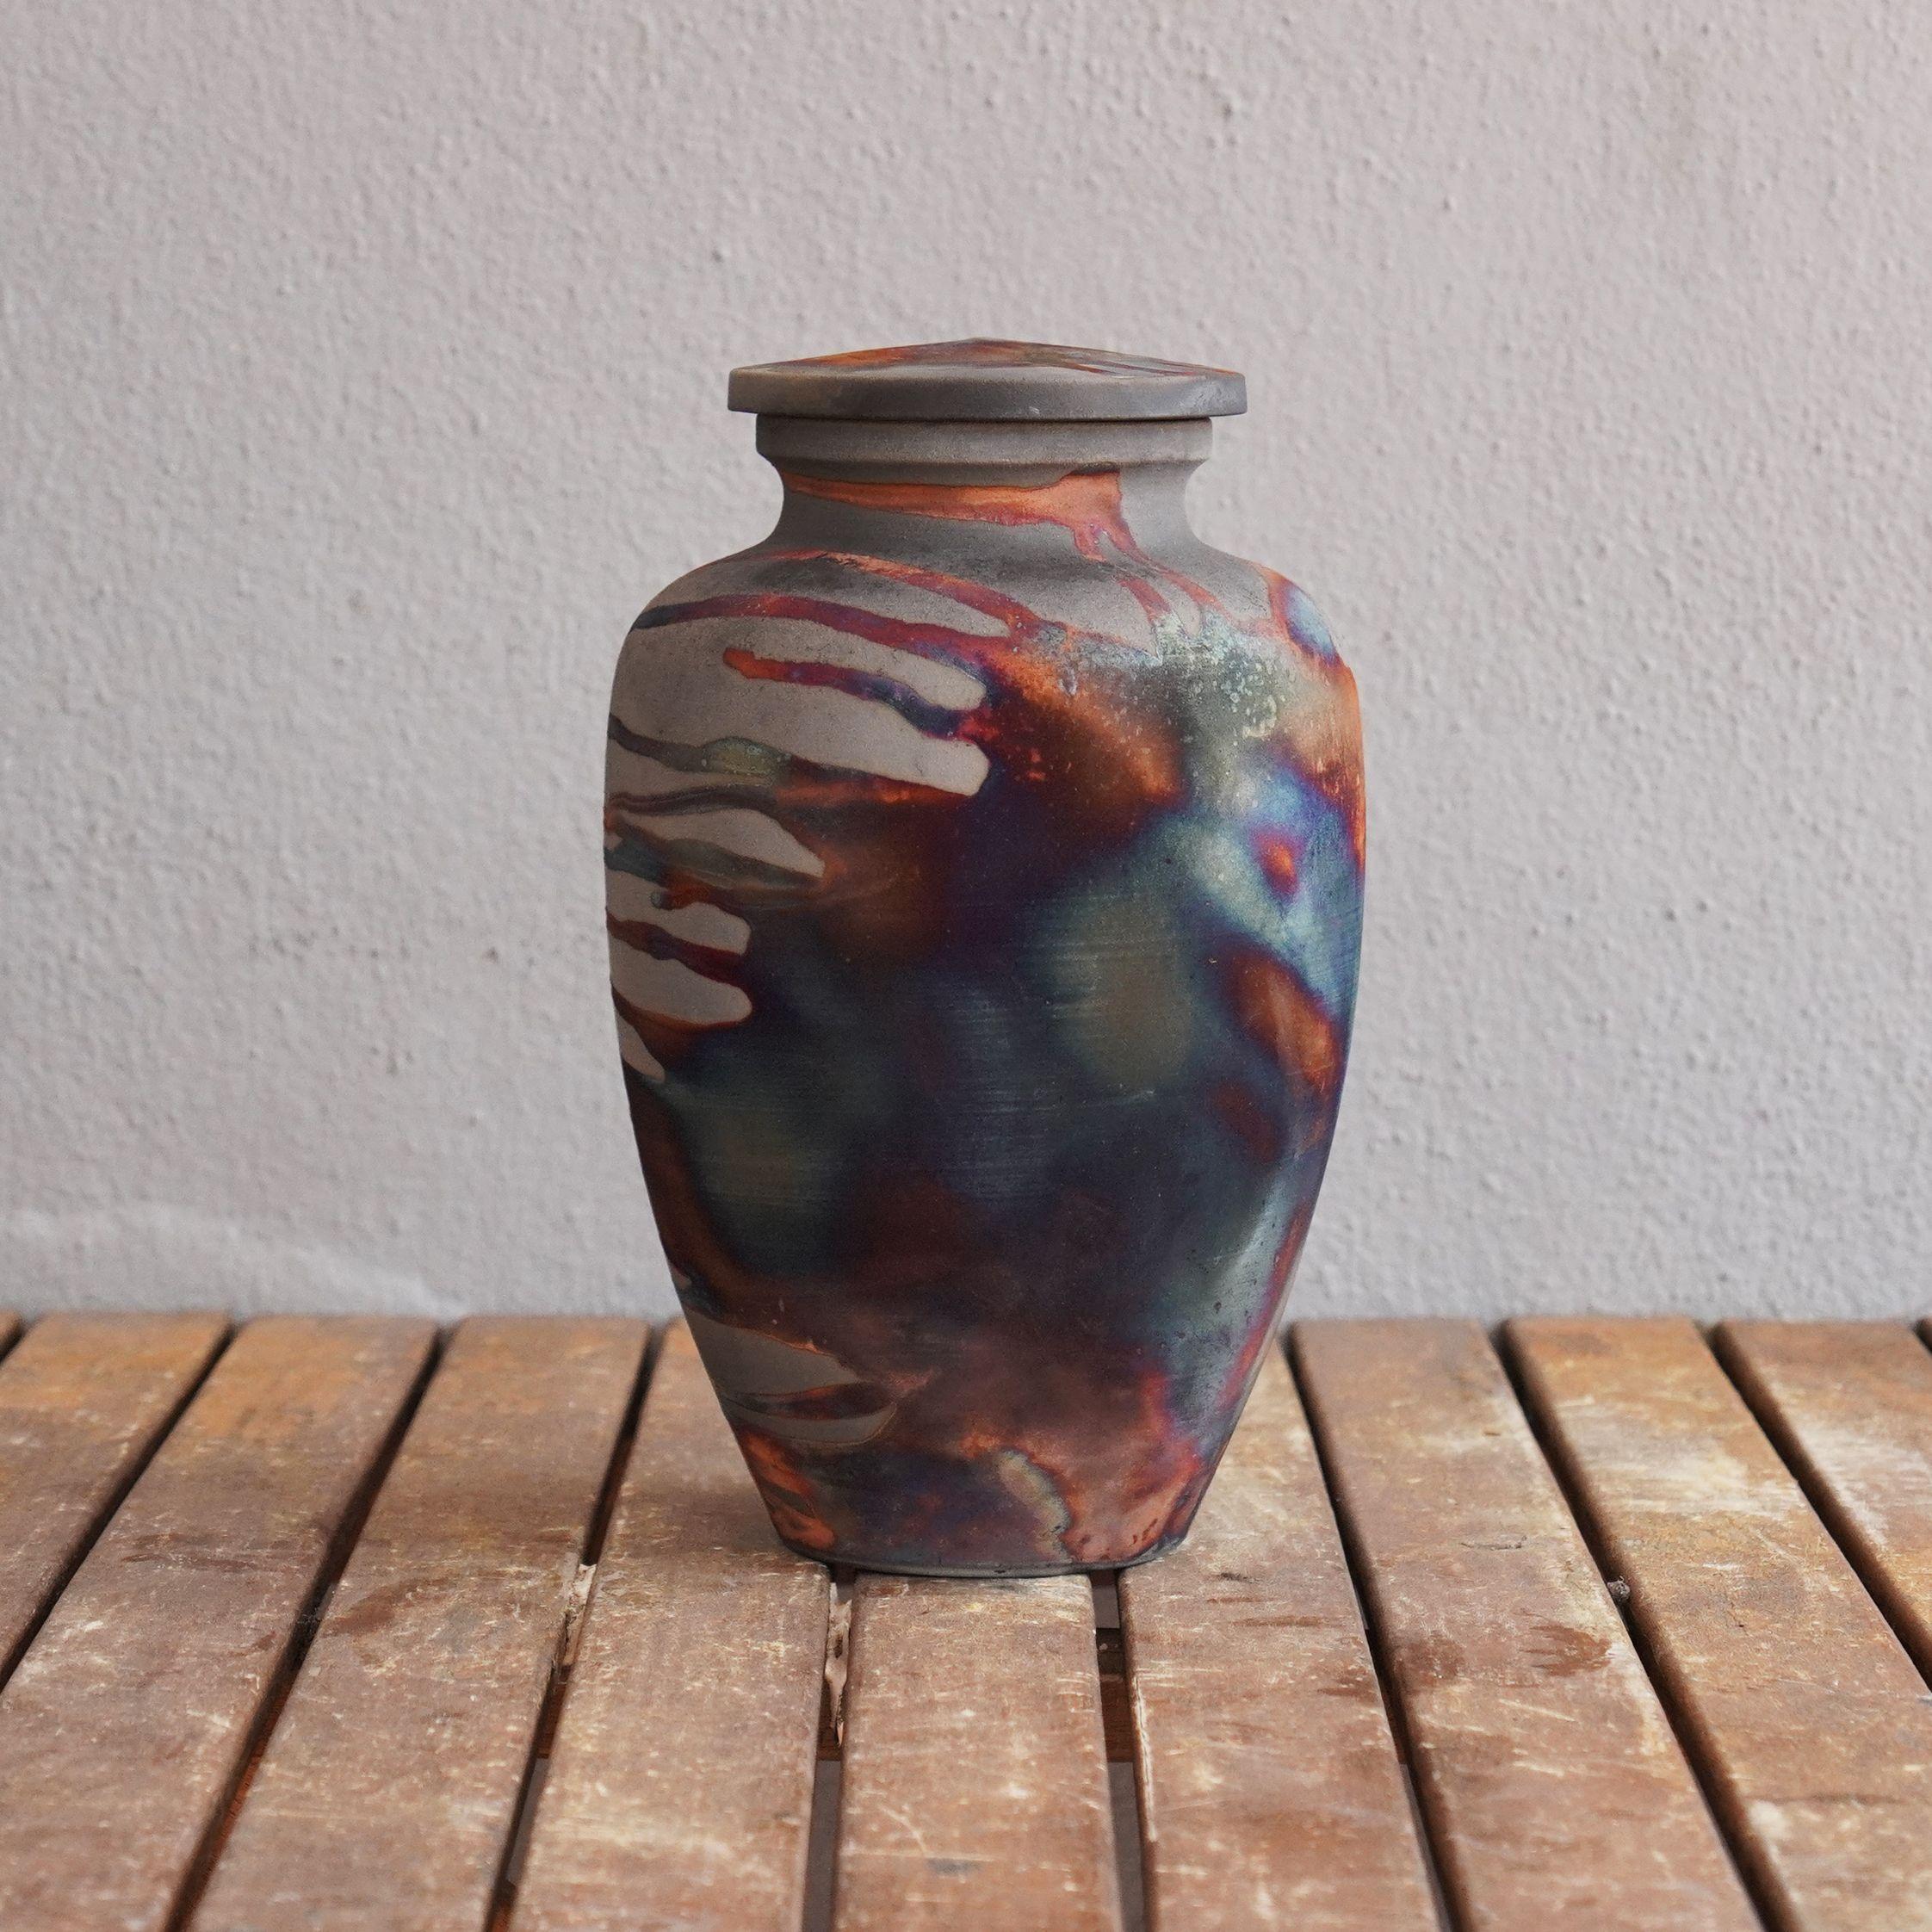 firing raku pottery creates a pattern that is